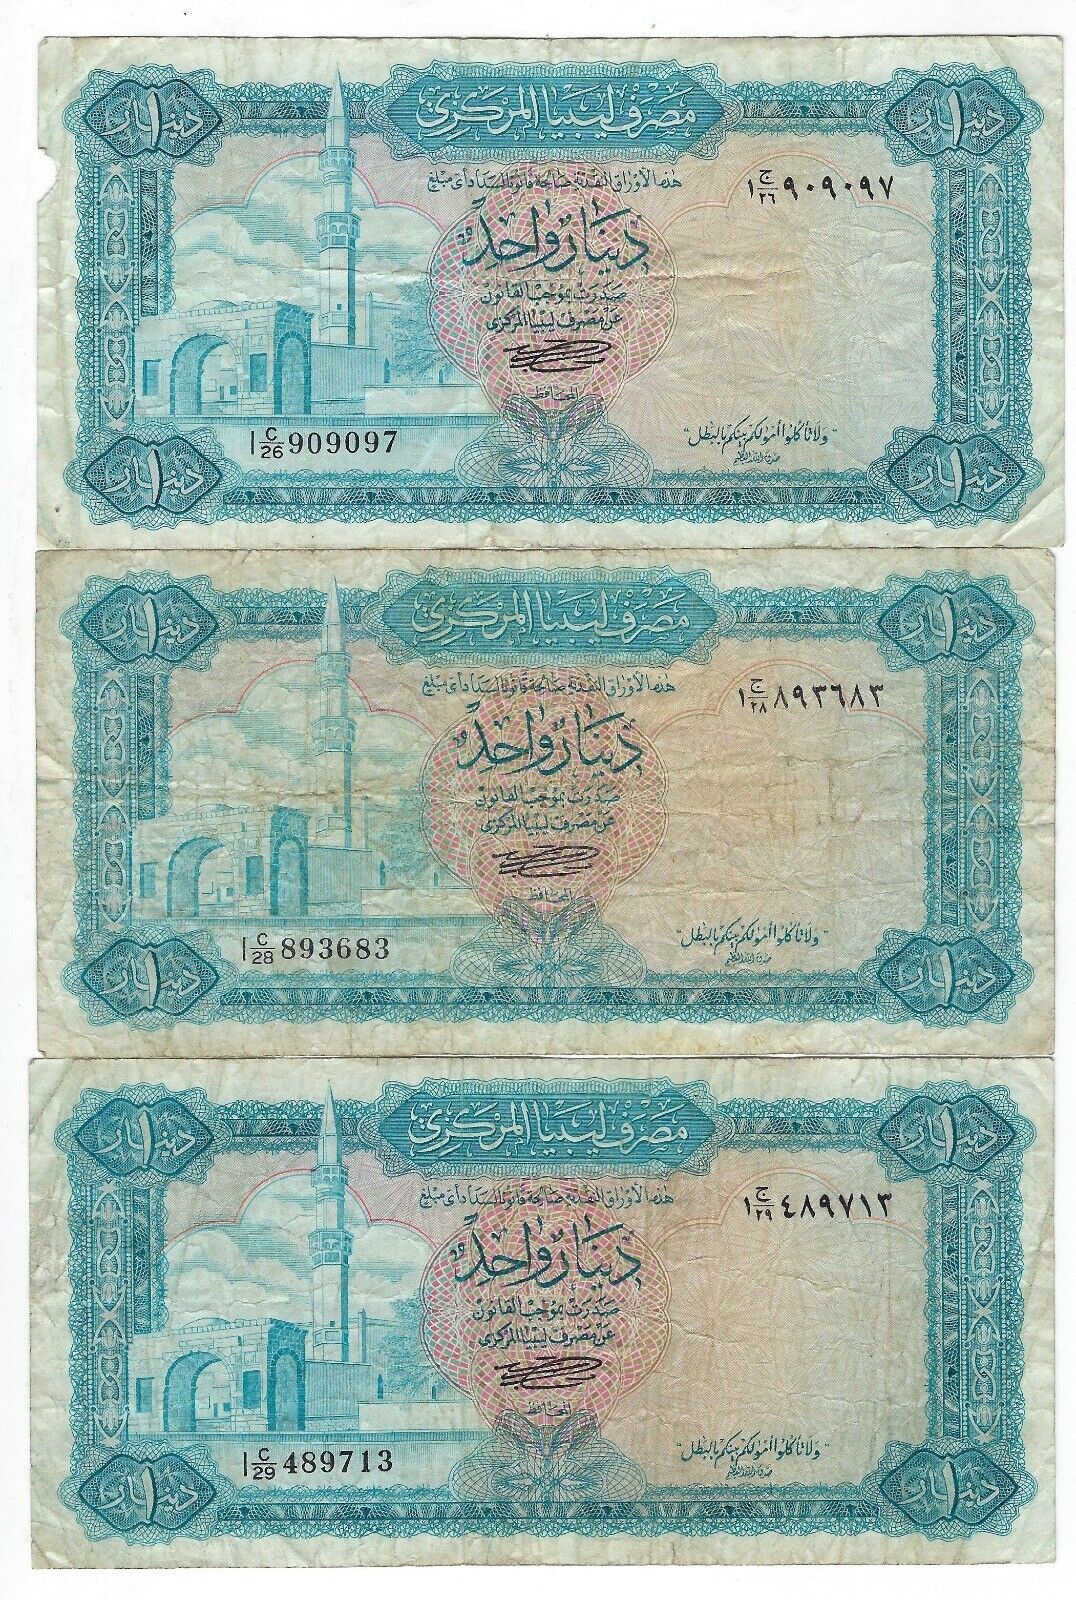 Libya 1 Dinar 1972, 3 Notes, Fine .LY1